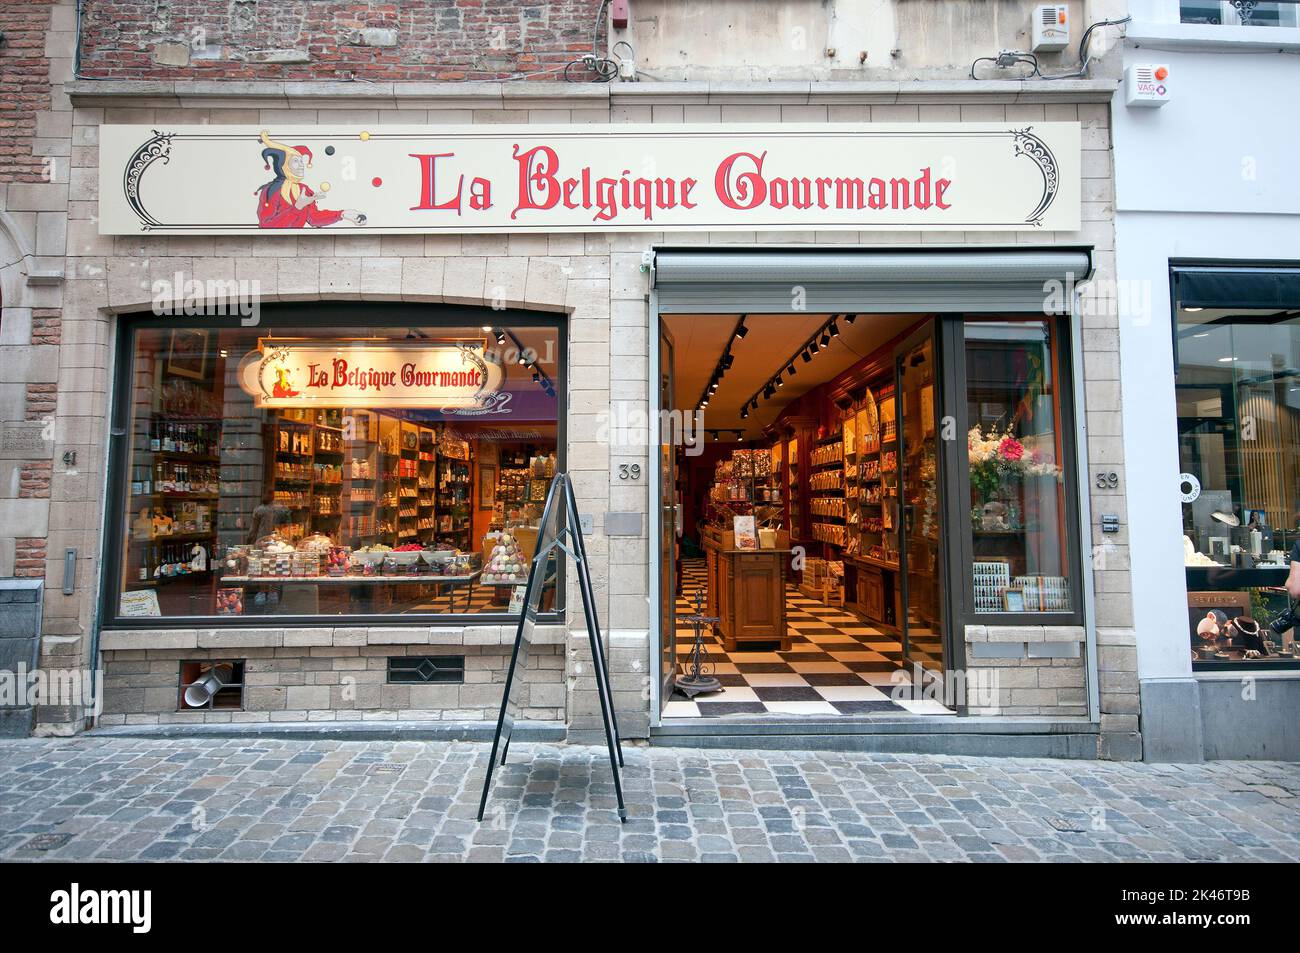 La Belgique Gourmande chocolate shop, Brussels, Belgium Stock Photo